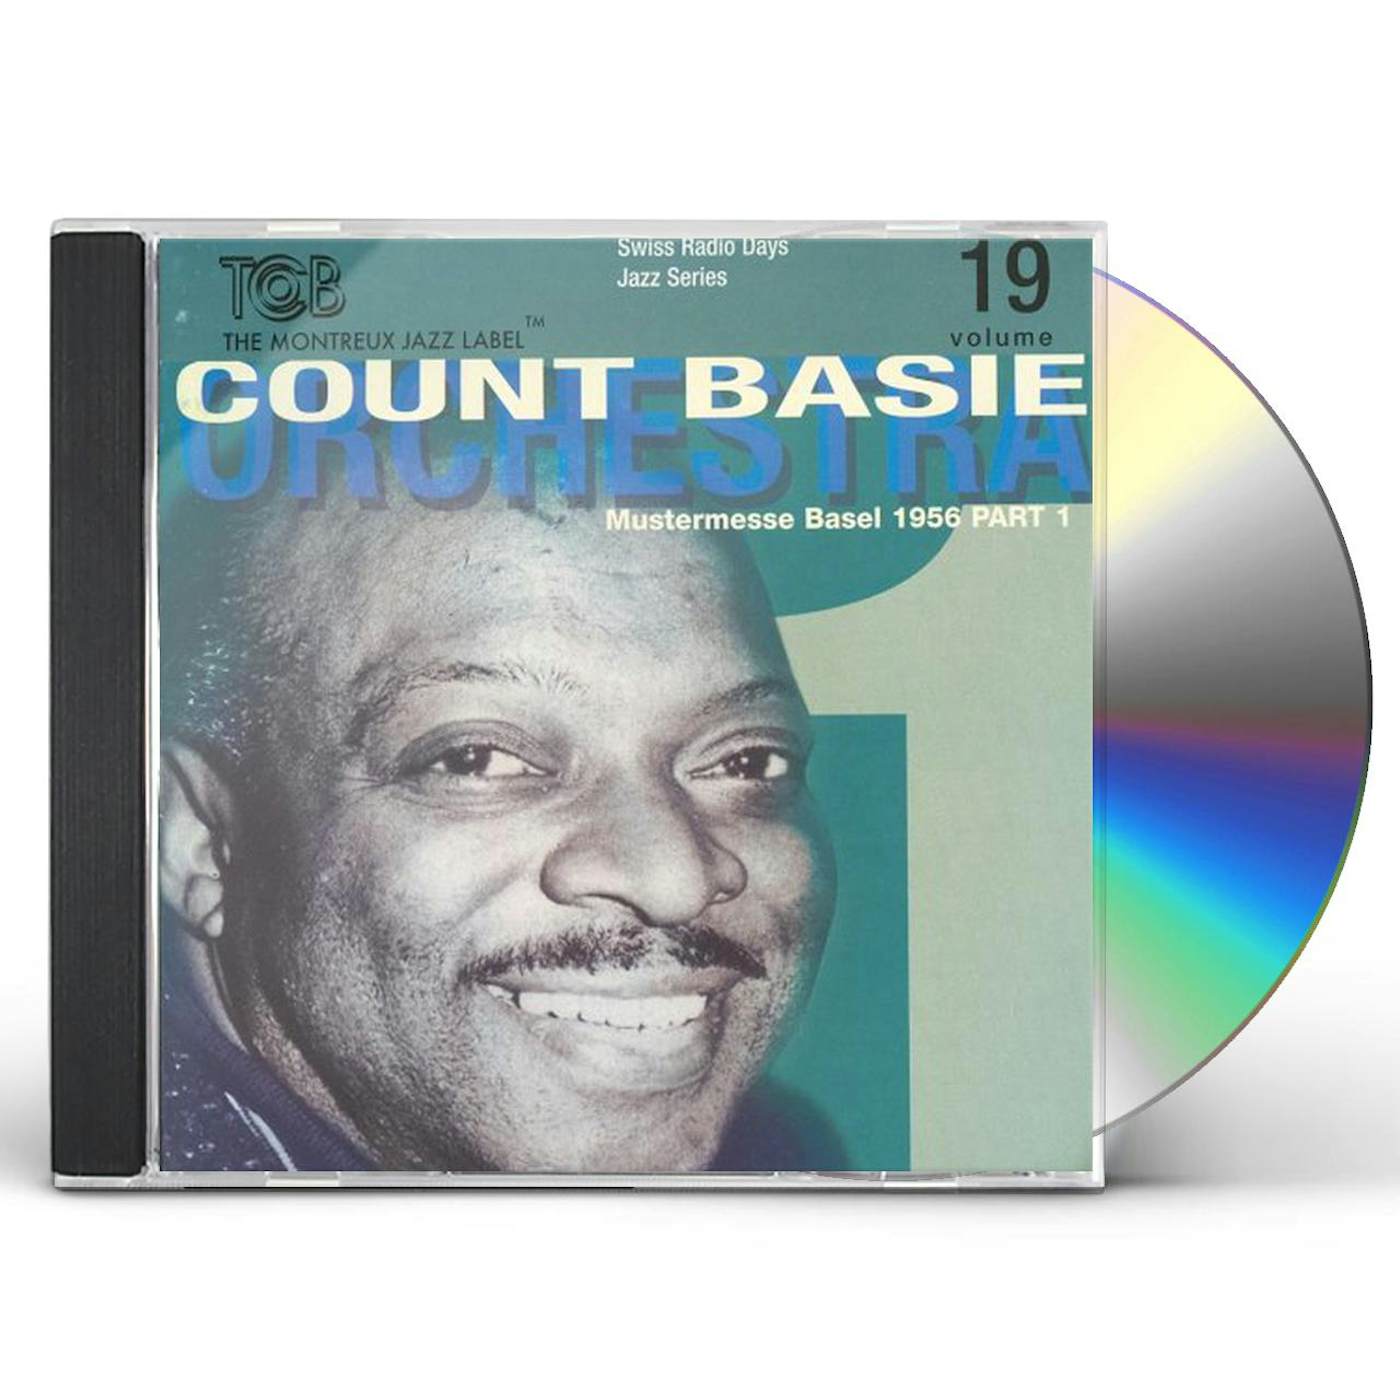 Count Basie SWISS RADIO DAYS 19 CD